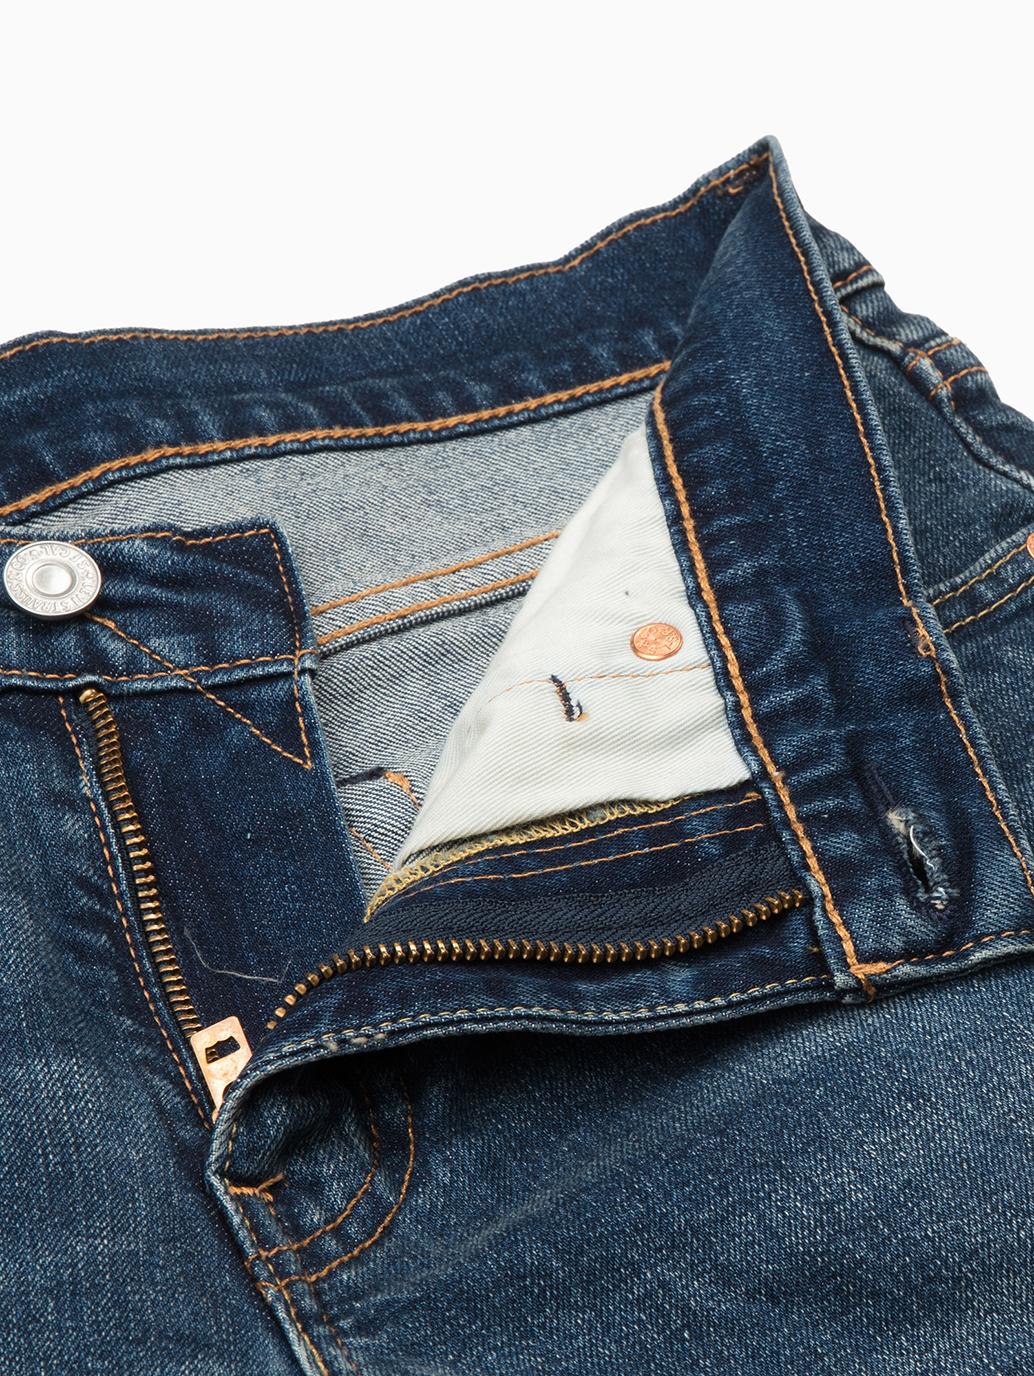 Buy Slim Fit Jeans | Official Online Shop